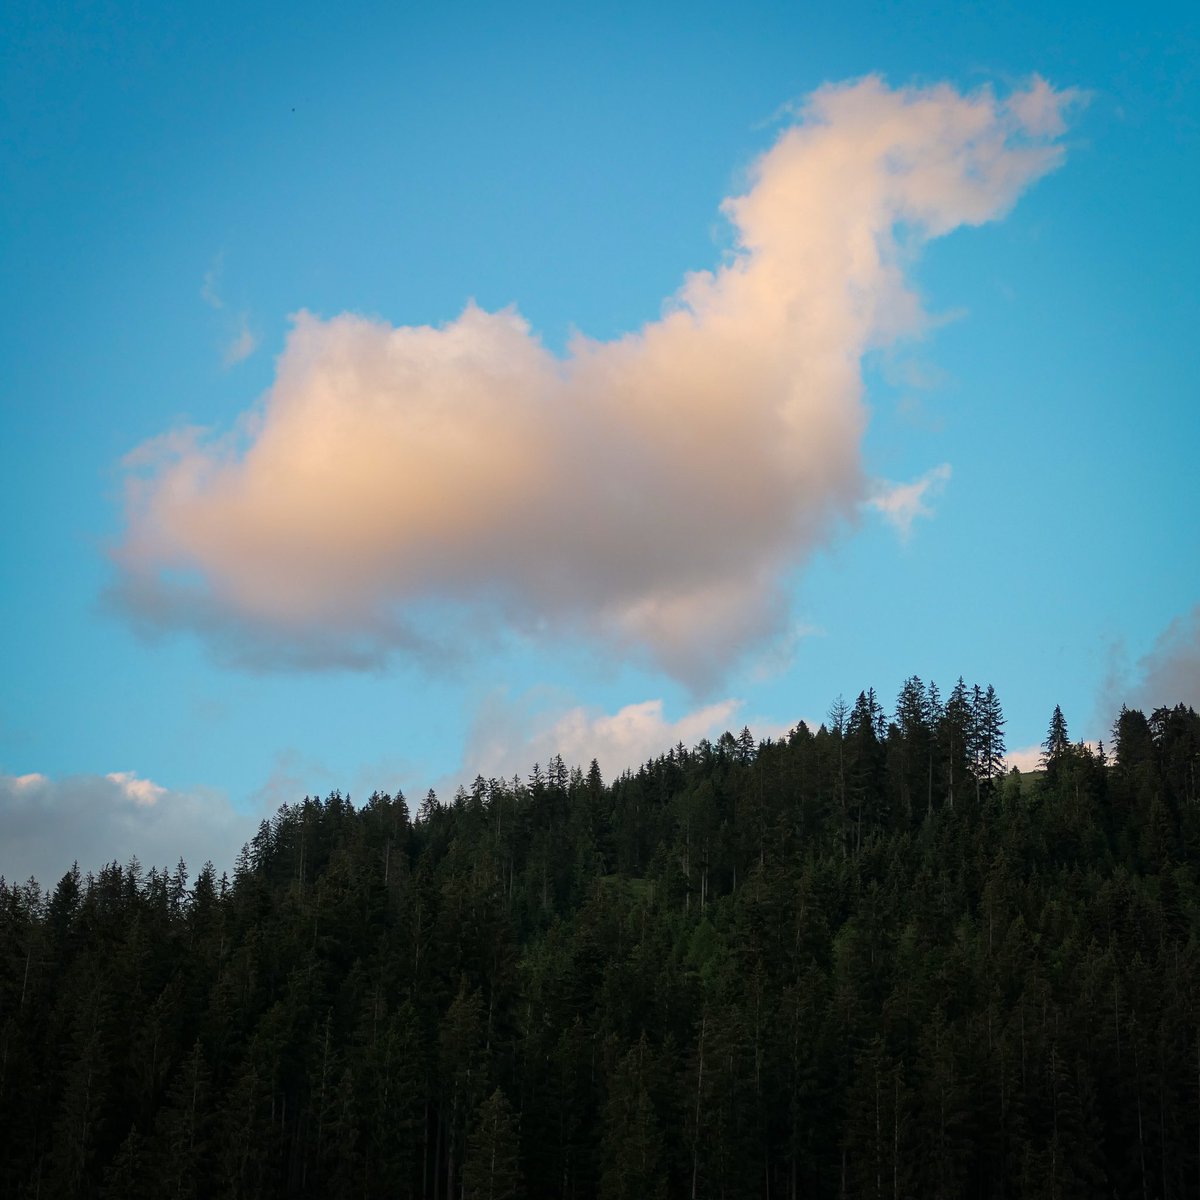 Last light 👌🏽.

#clouds #landscapephotography #landscape #cloudphotography #earthtones